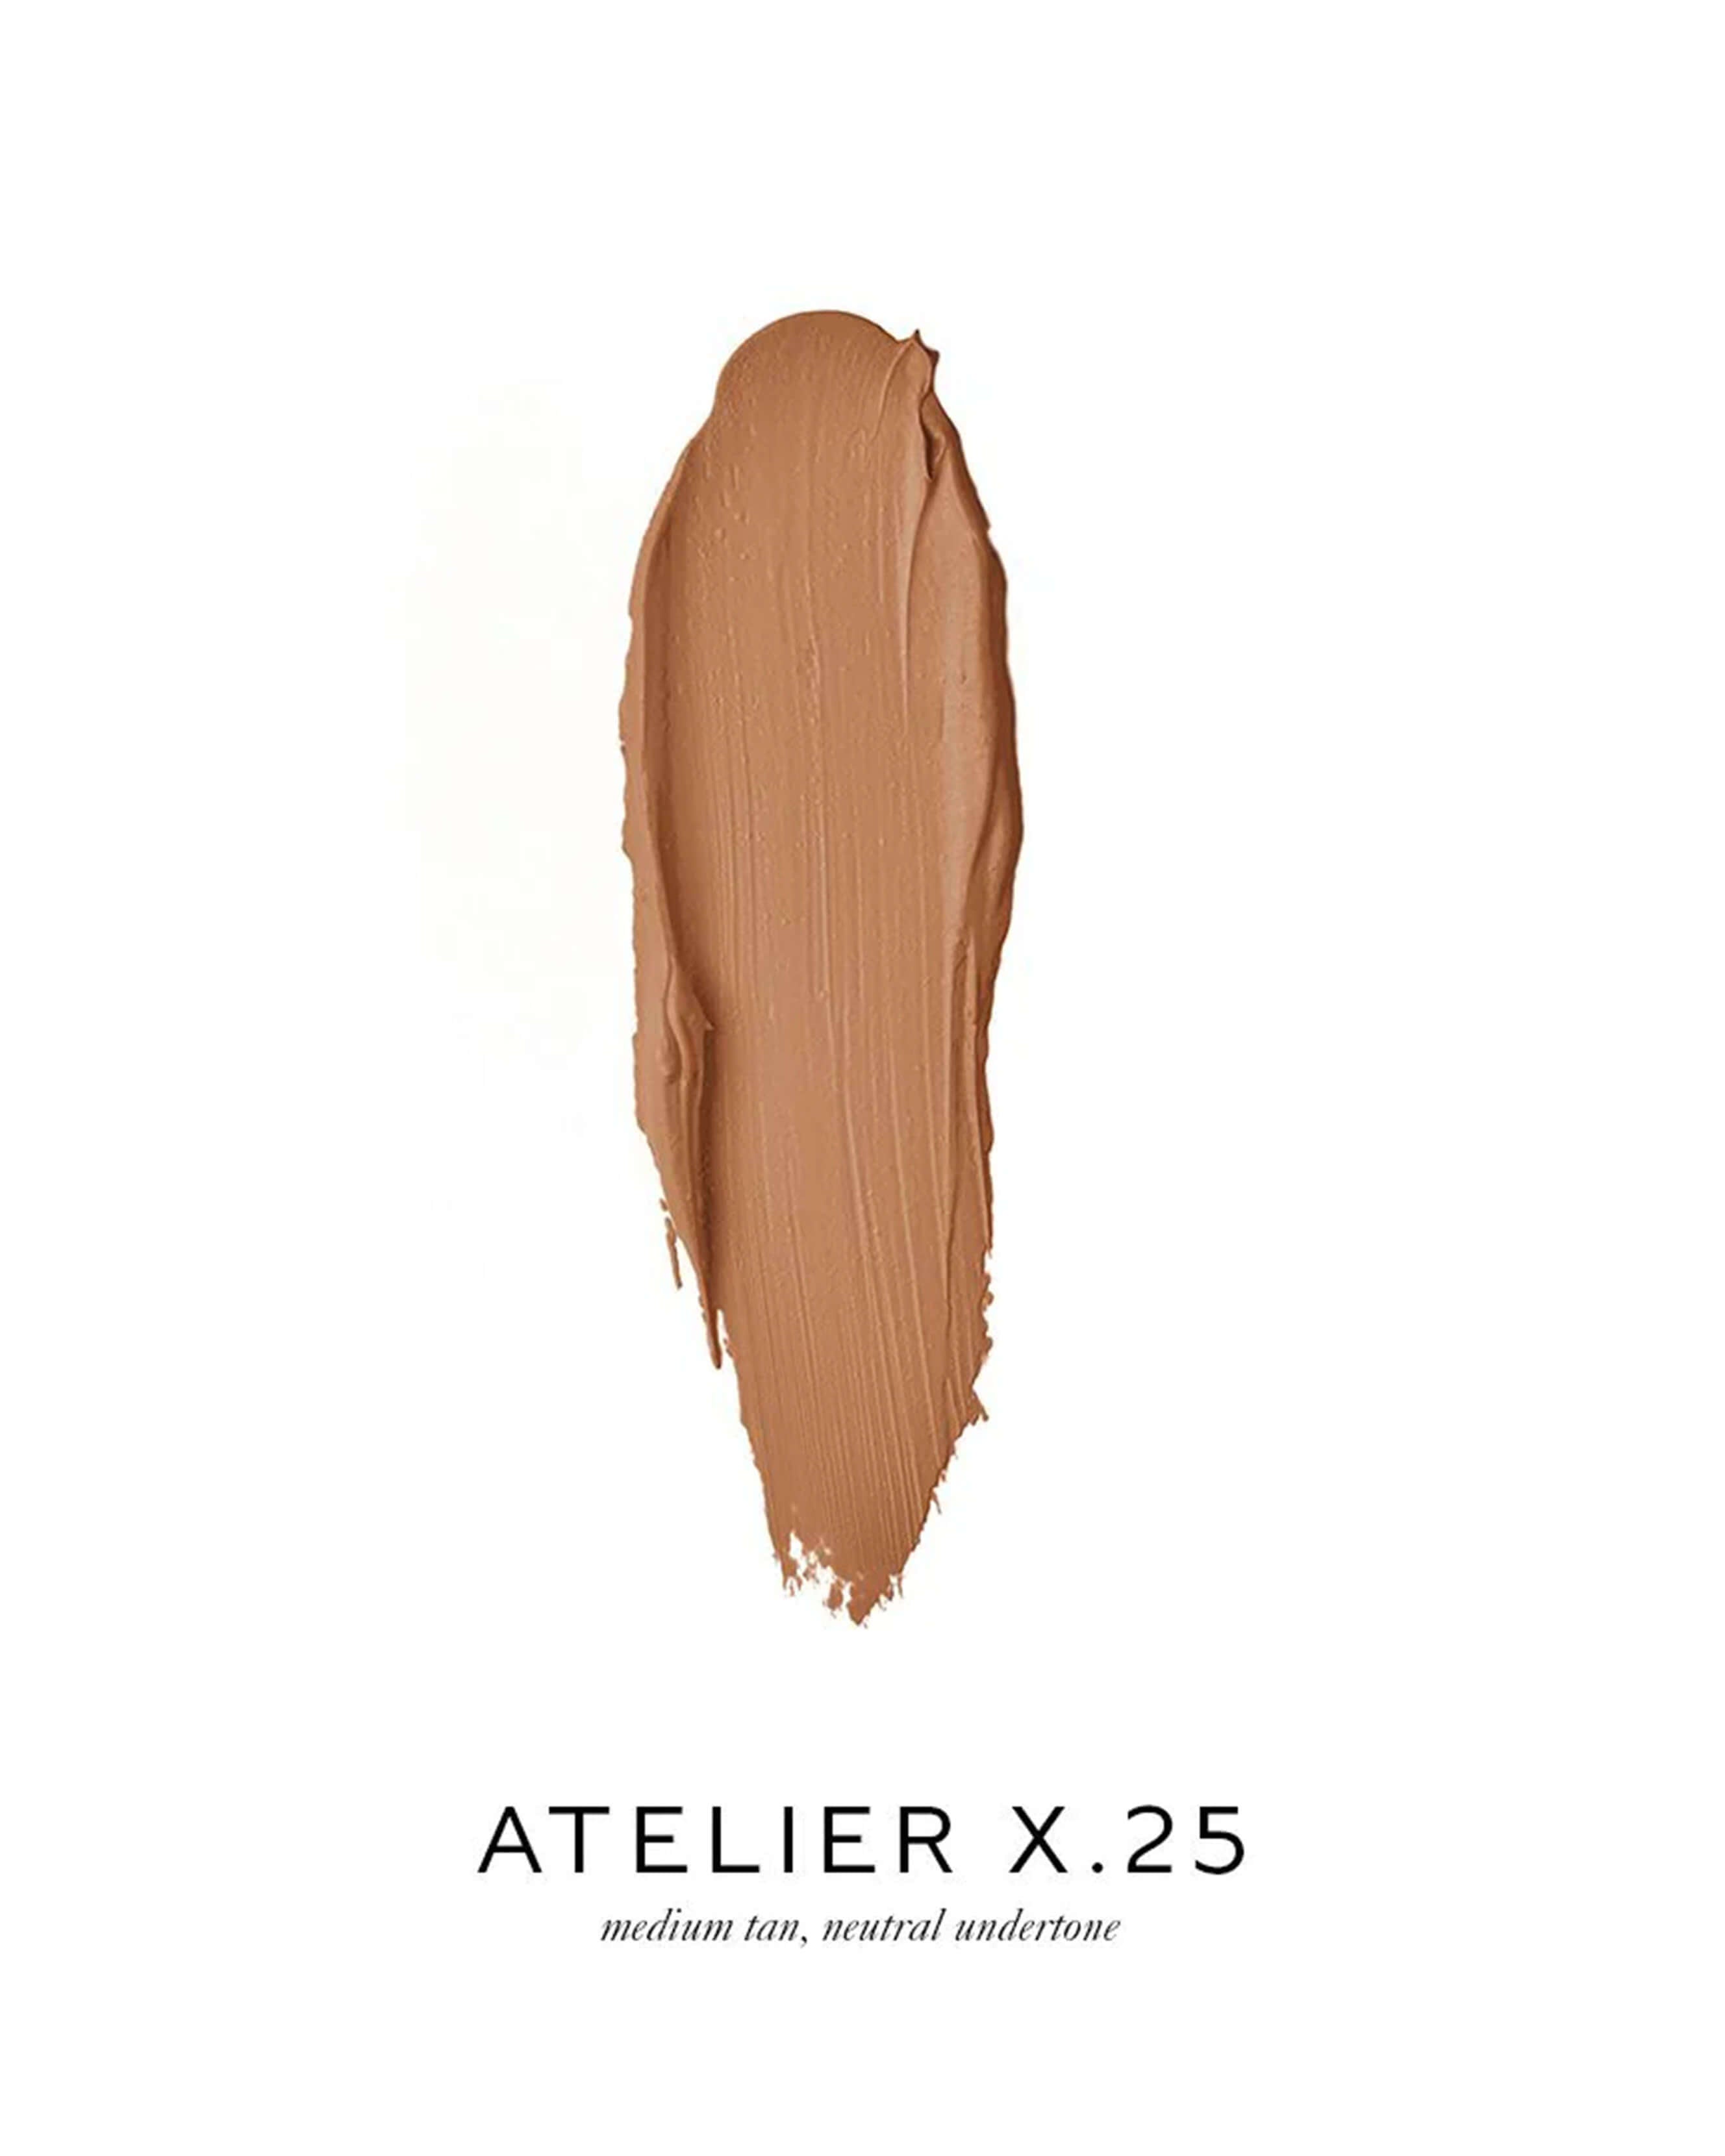 Atelier X.25 (medium tan, neutral undertone)